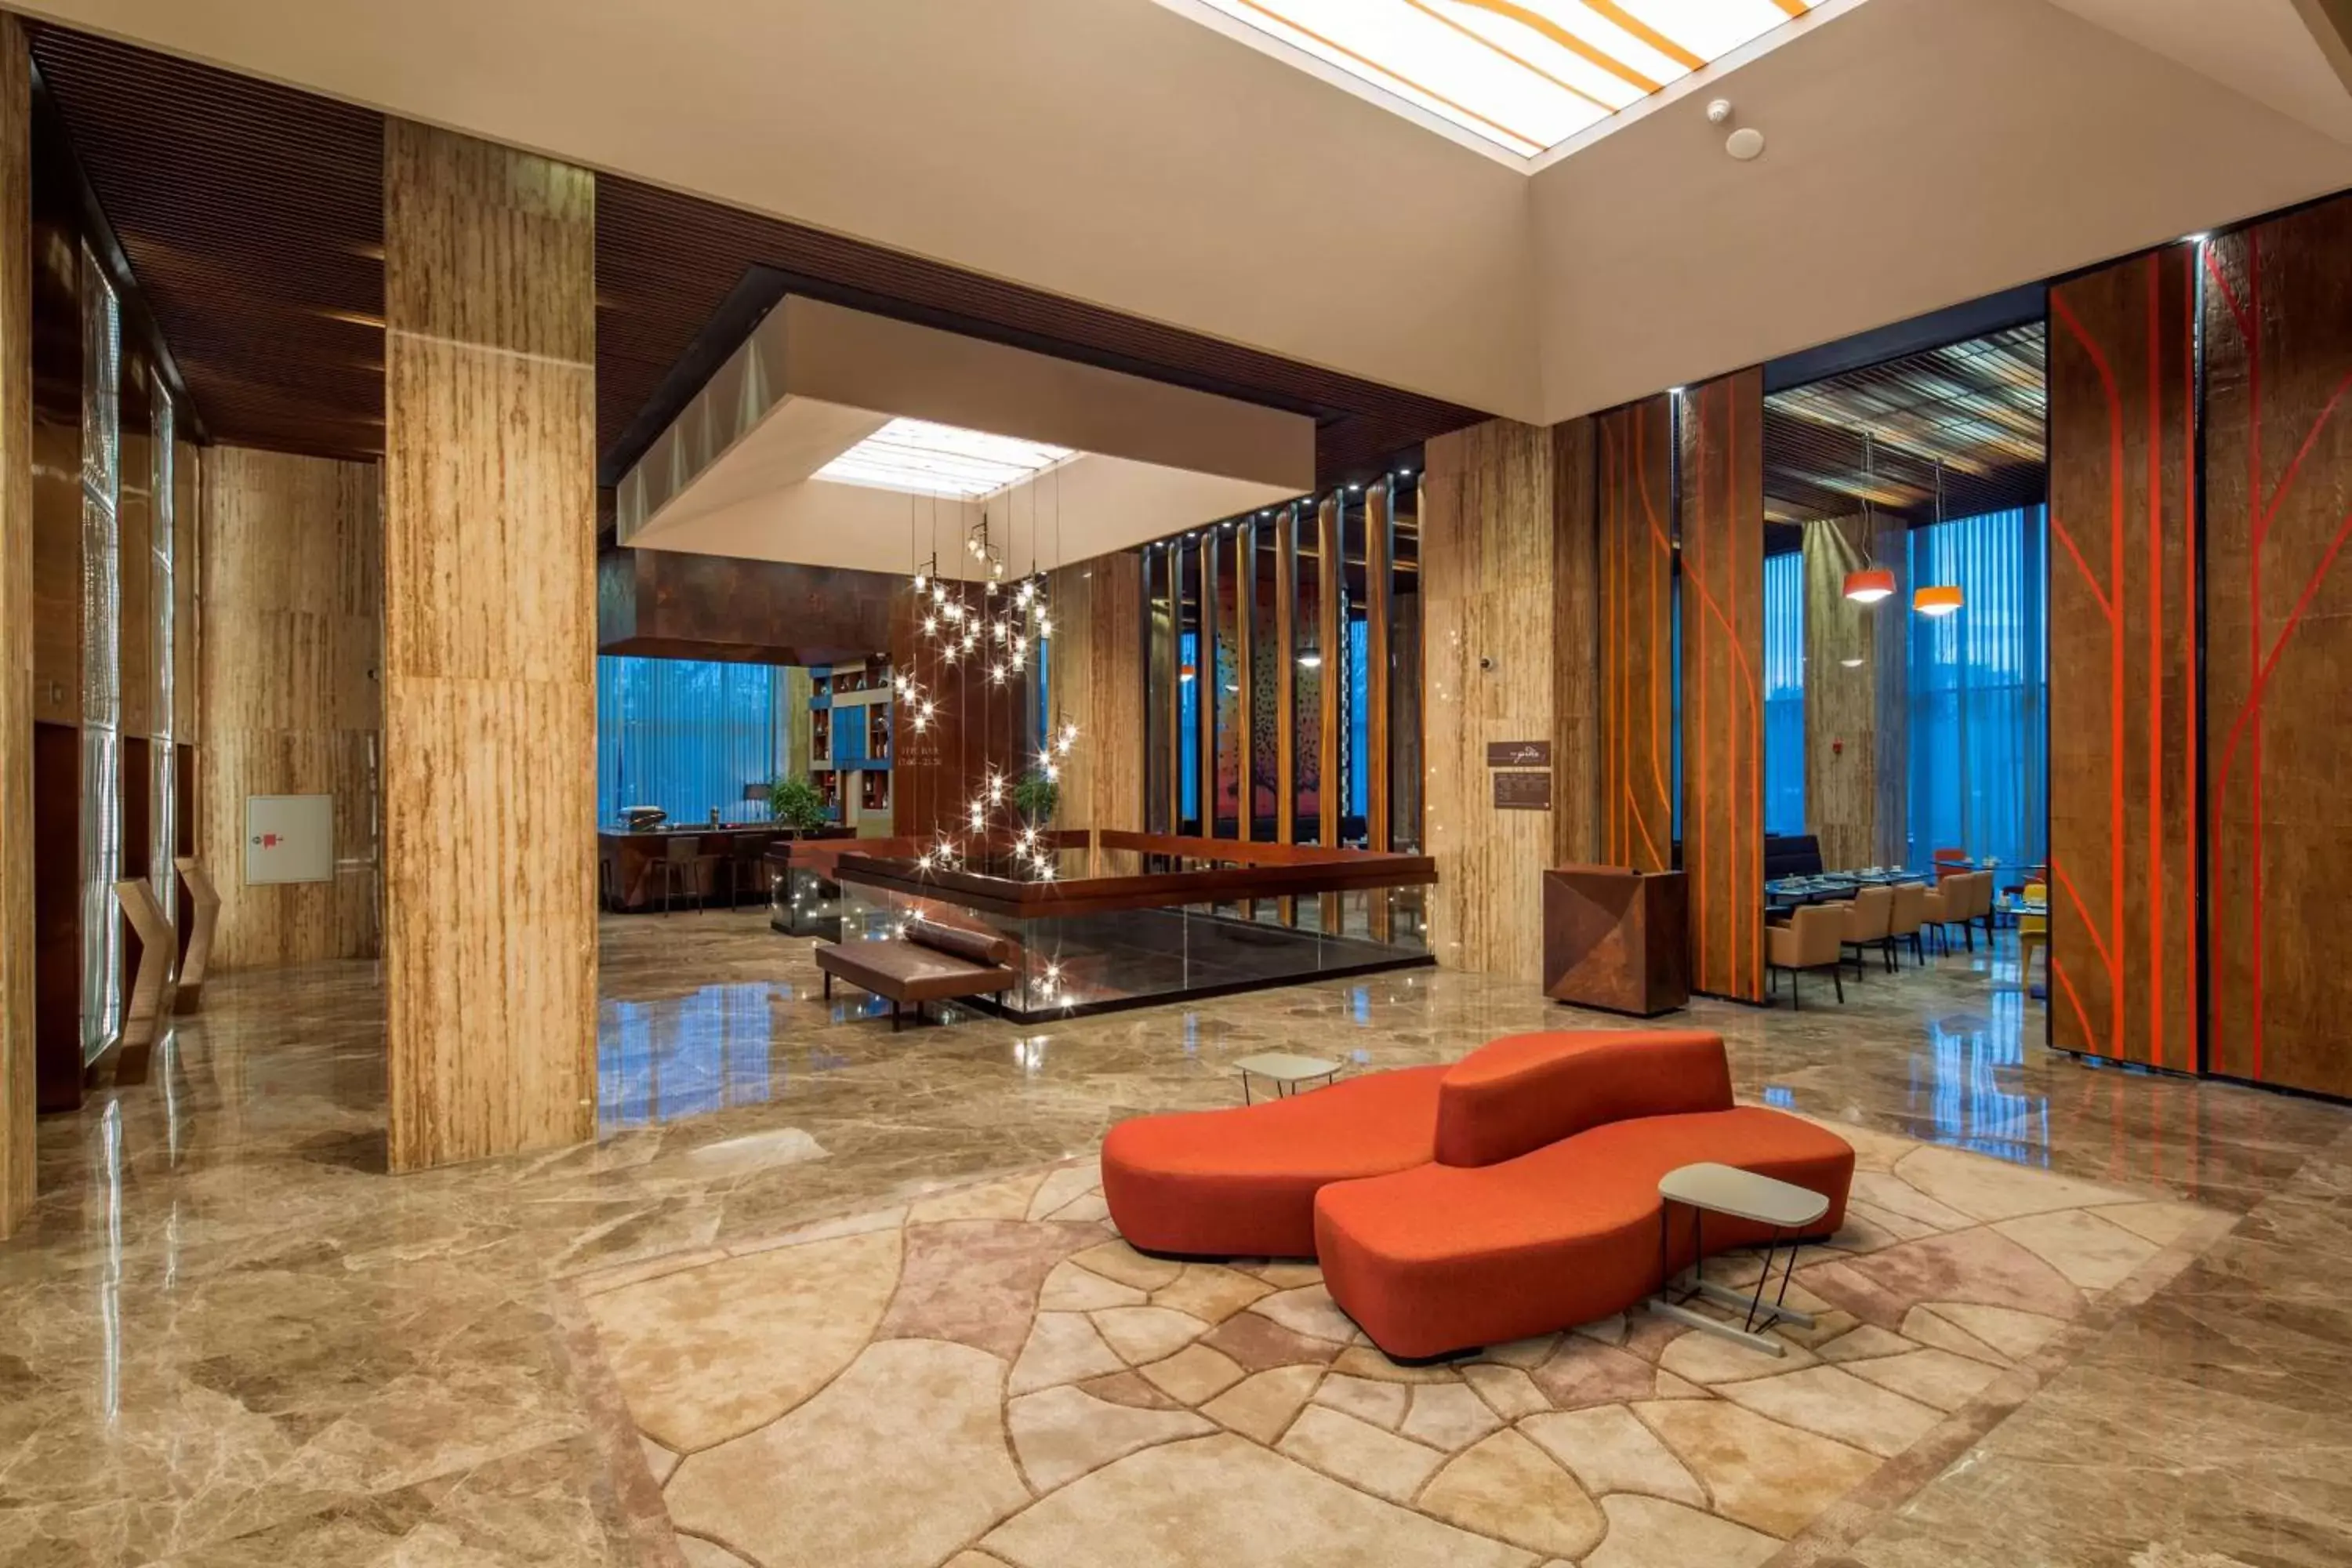 Lobby or reception in Hilton Garden Inn Istanbul Atatürk Airport